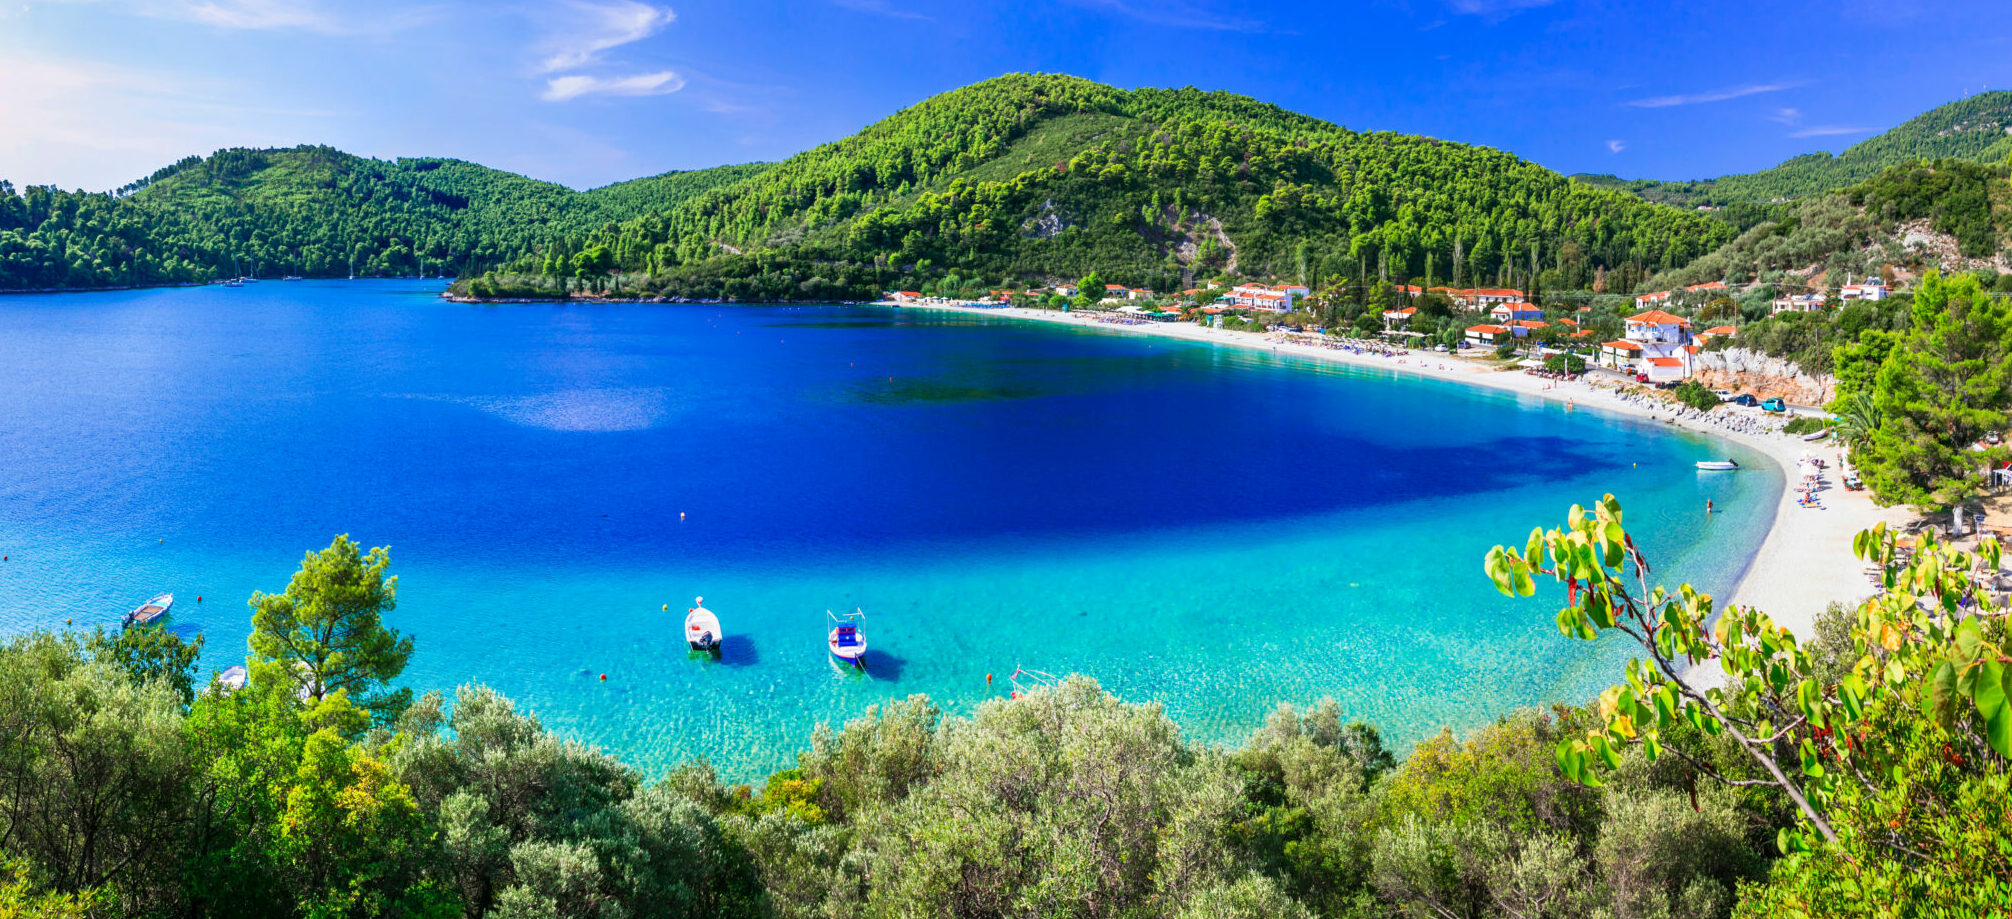 Three days on Skopelos, the greenest Aegean isle